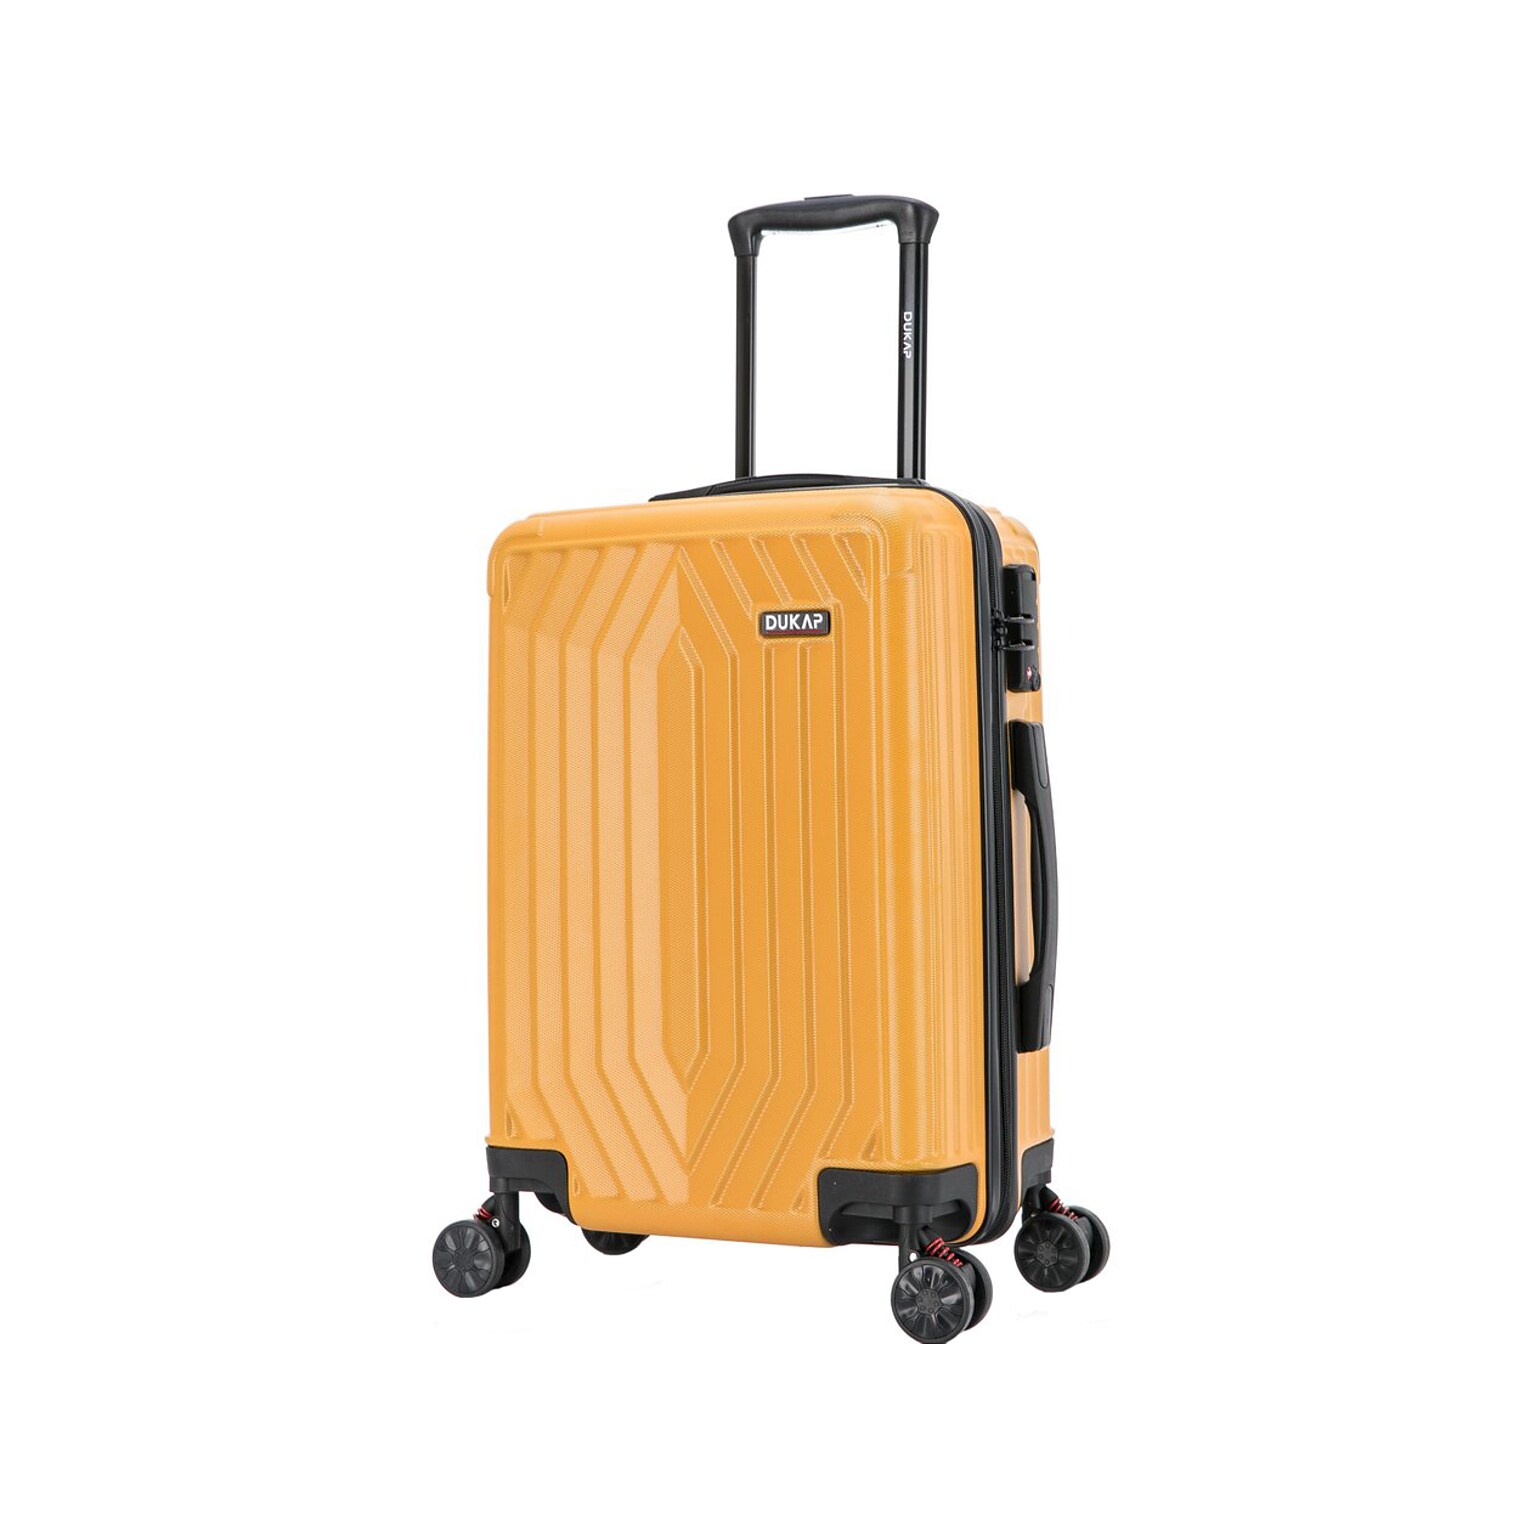 DUKAP Stratos 21.65 Hardside Carry-On Suitcase, 4-Wheeled Spinner, TSA Checkpoint Friendly, Terracota (DKSTR00S-TER)